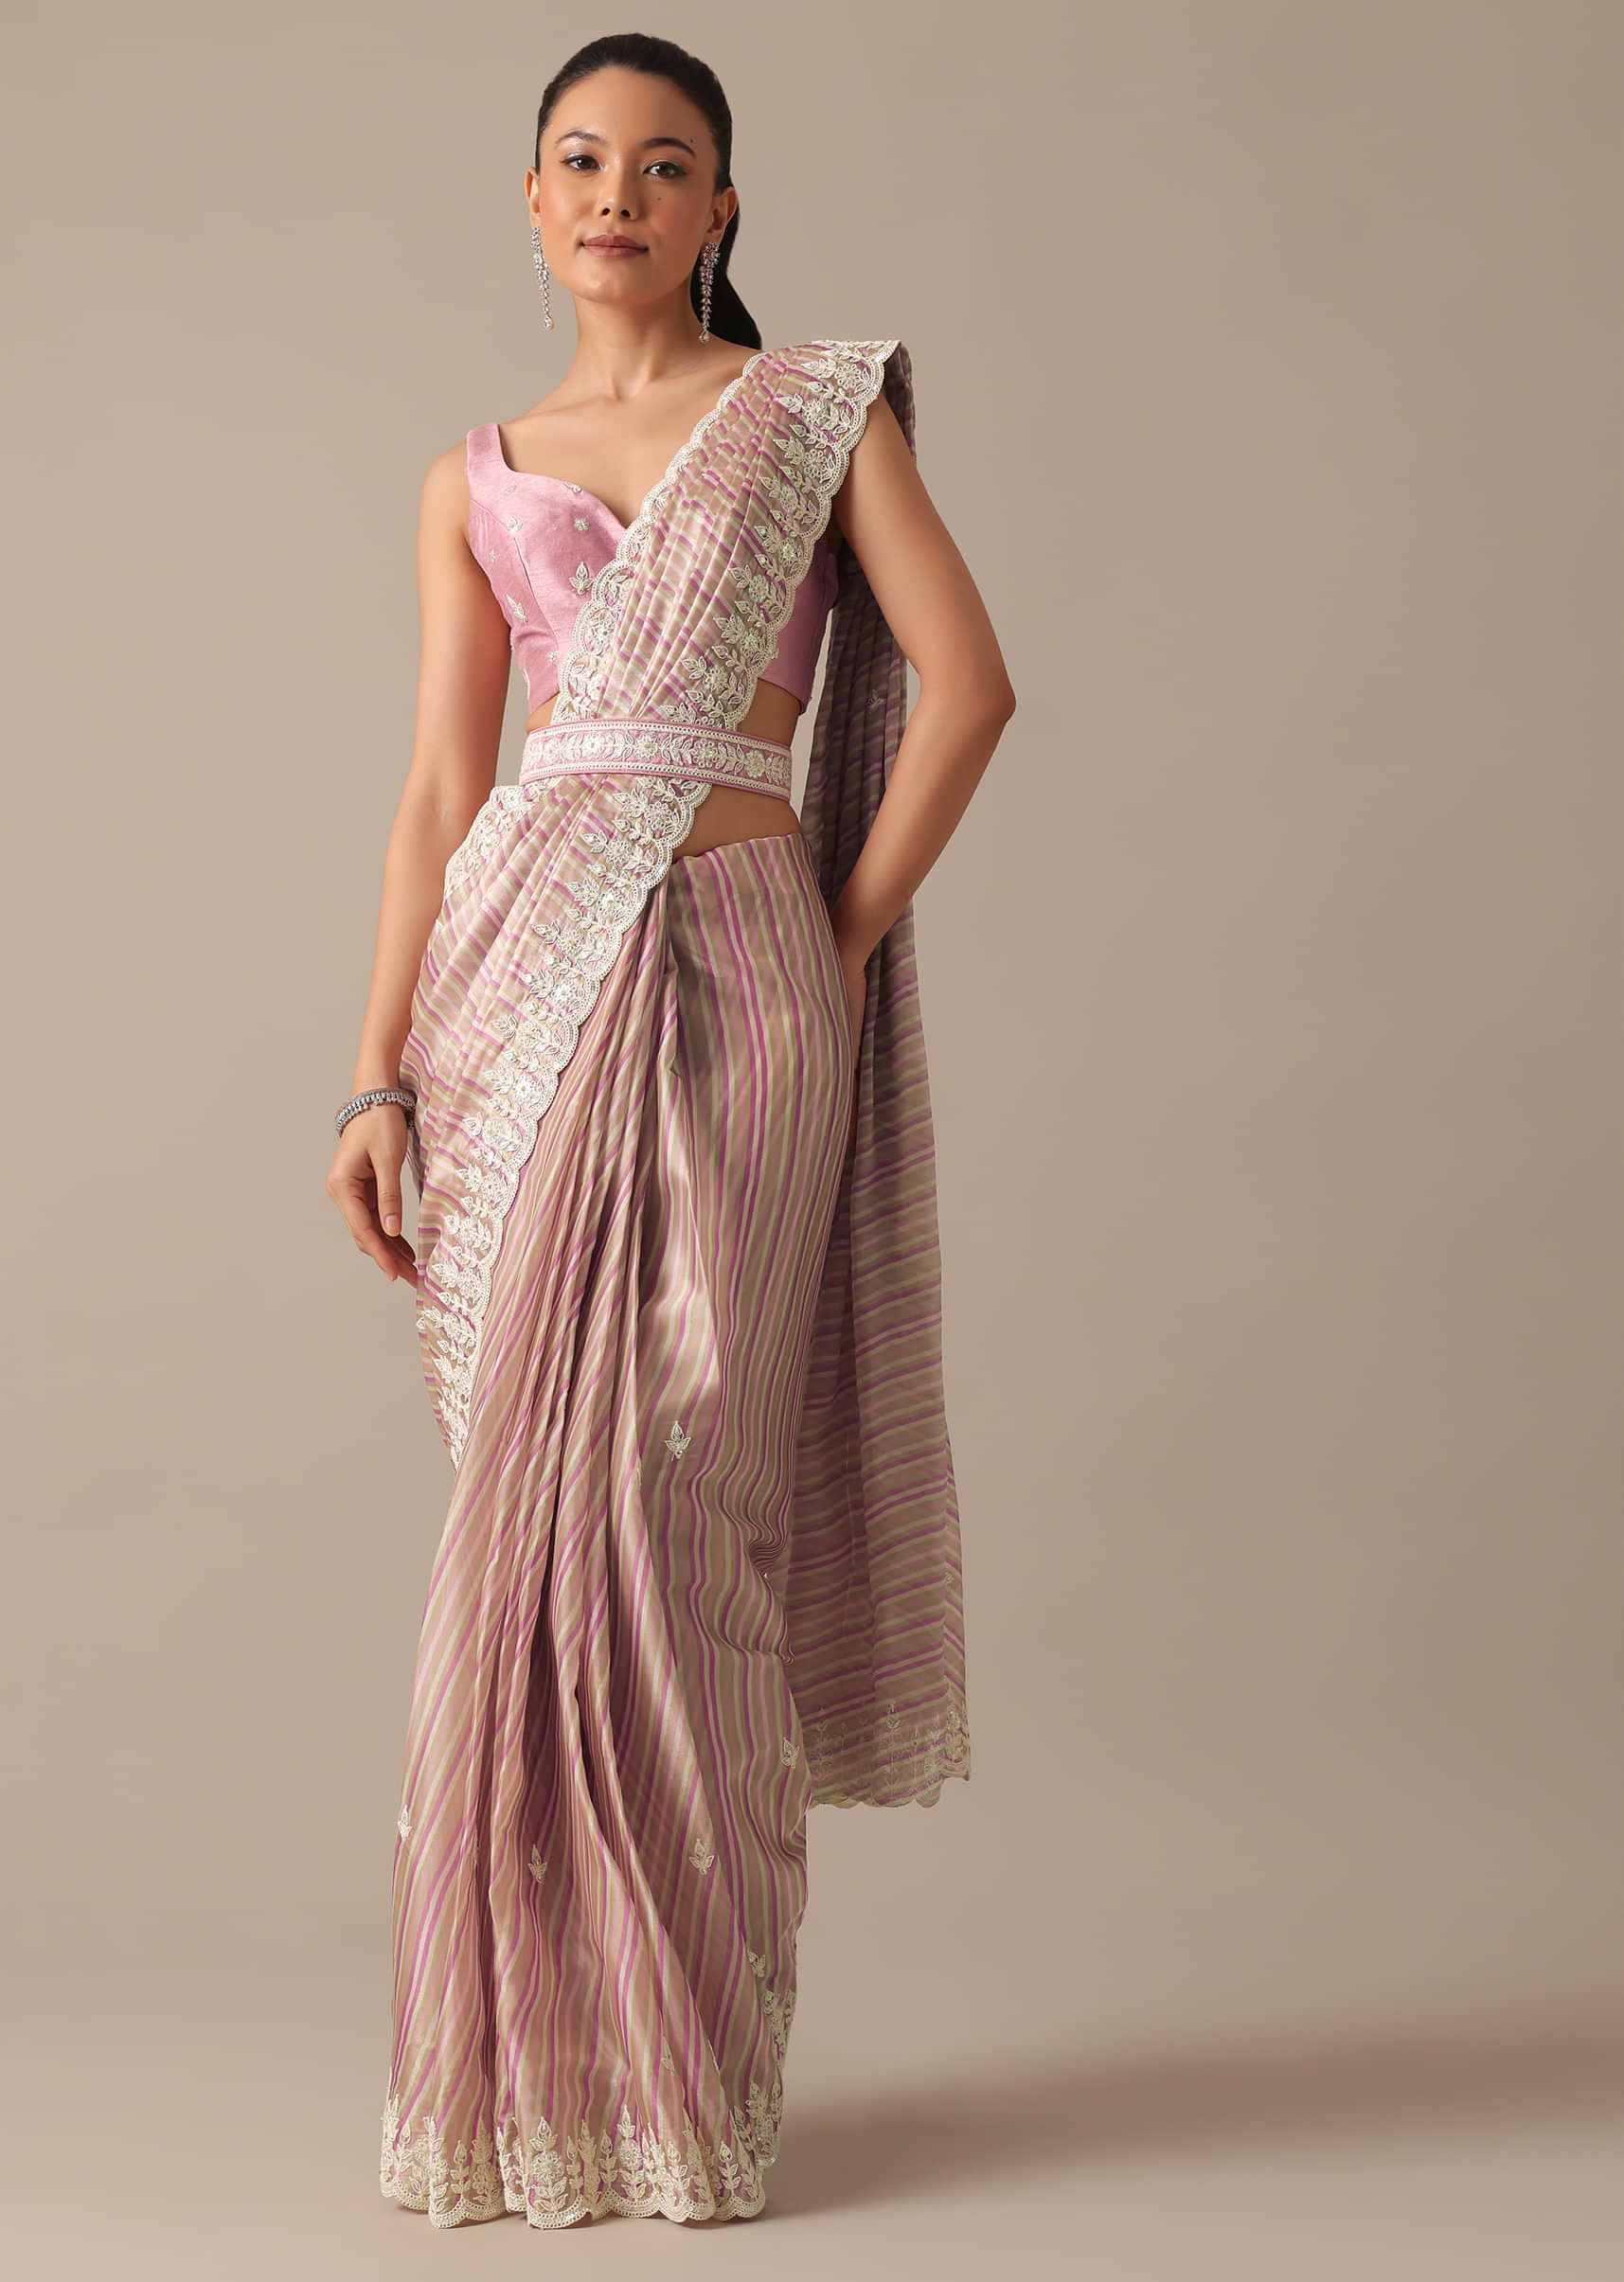 sari belt, sari belt Suppliers and Manufacturers at